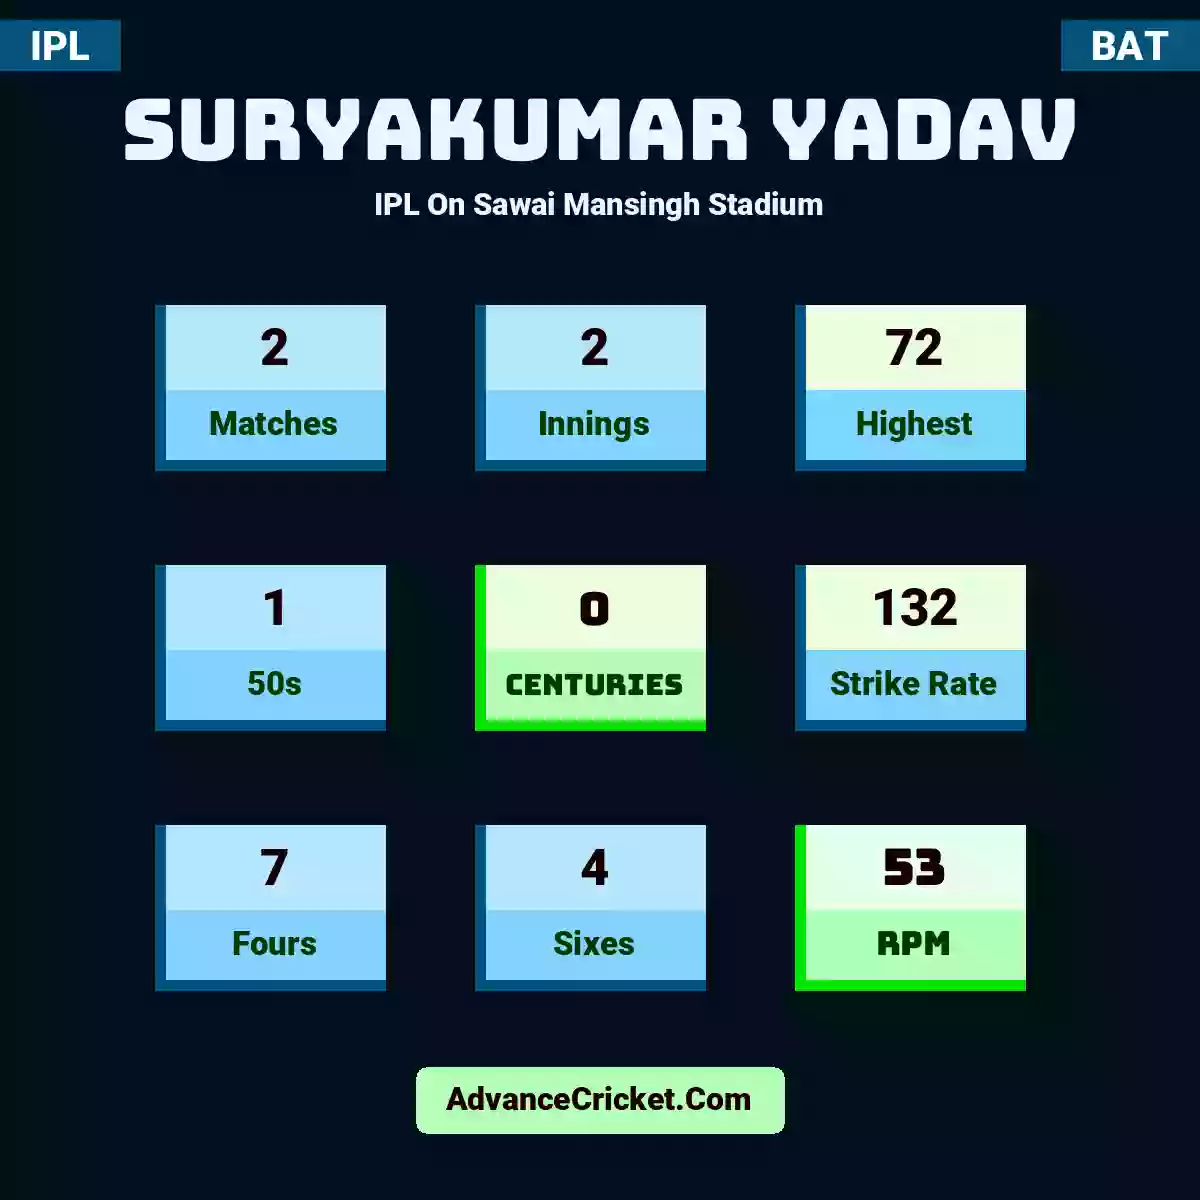 Suryakumar Yadav IPL  On Sawai Mansingh Stadium, Suryakumar Yadav played 2 matches, scored 72 runs as highest, 1 half-centuries, and 0 centuries, with a strike rate of 132. S.Yadav hit 7 fours and 4 sixes, with an RPM of 53.